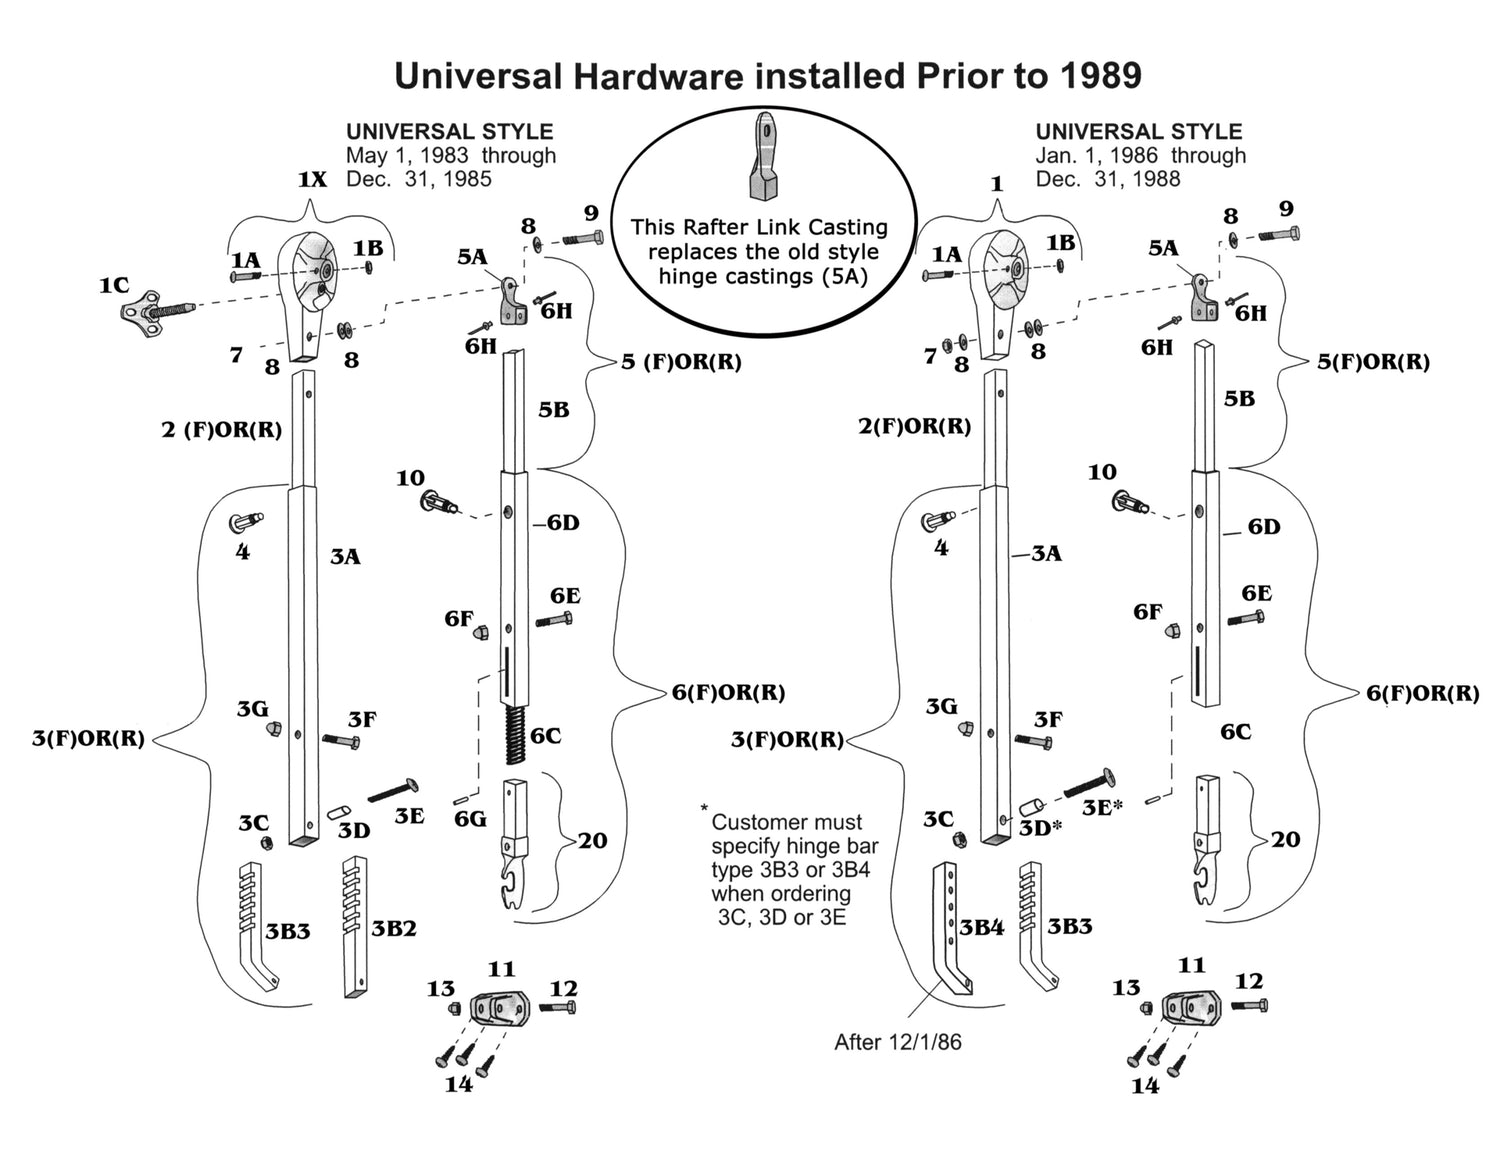 Universal Hardware Installed Prior to 1989